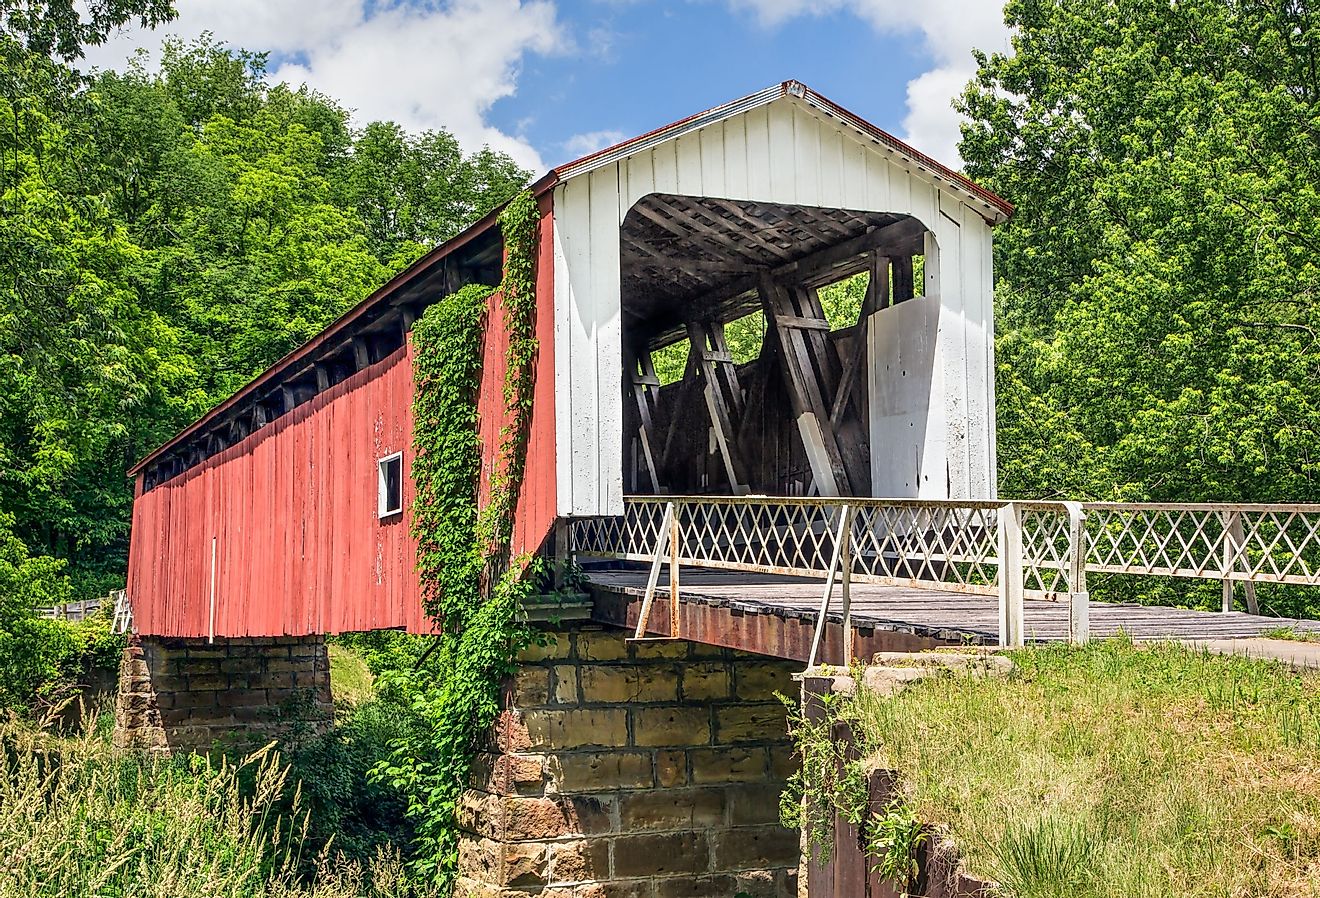 Also known as the Hildreth Covered Bridge or Lafaber's Mill Bridge, the historic Hills Covered Bridge crosses the Little Muskingum River near Marietta in Washington County, Ohio.